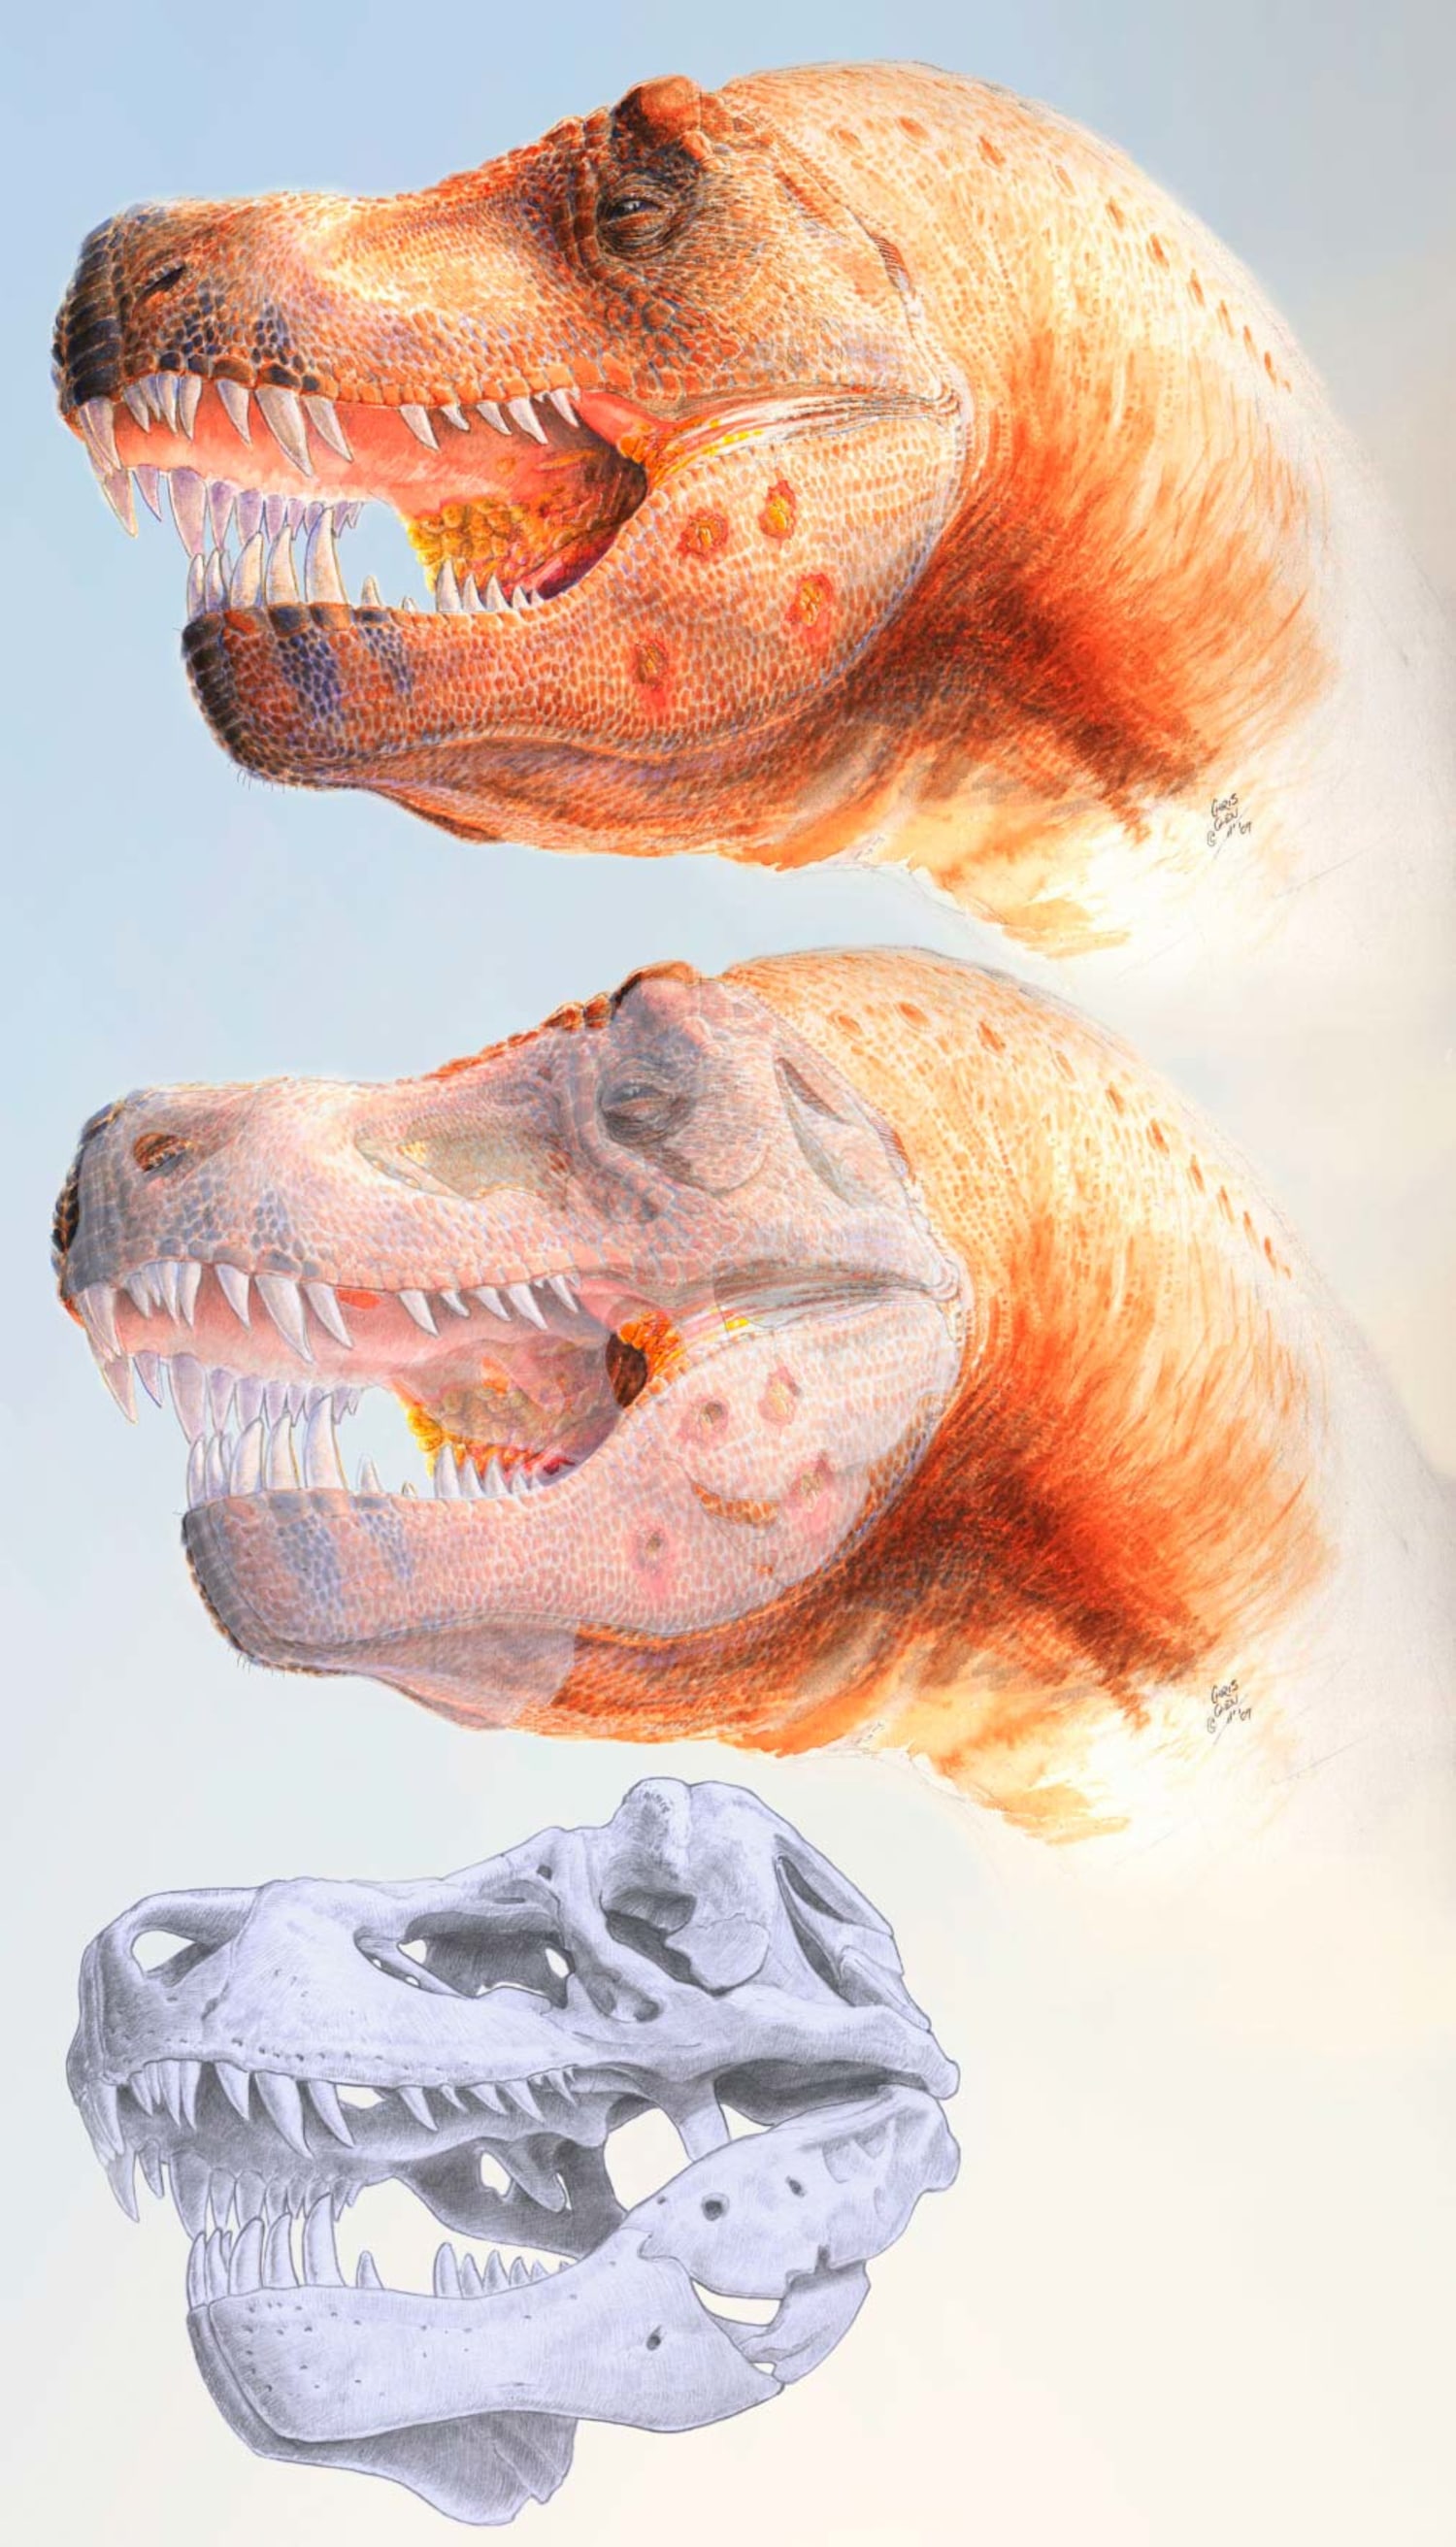 Cannibalism in Tyrannosaurus rex